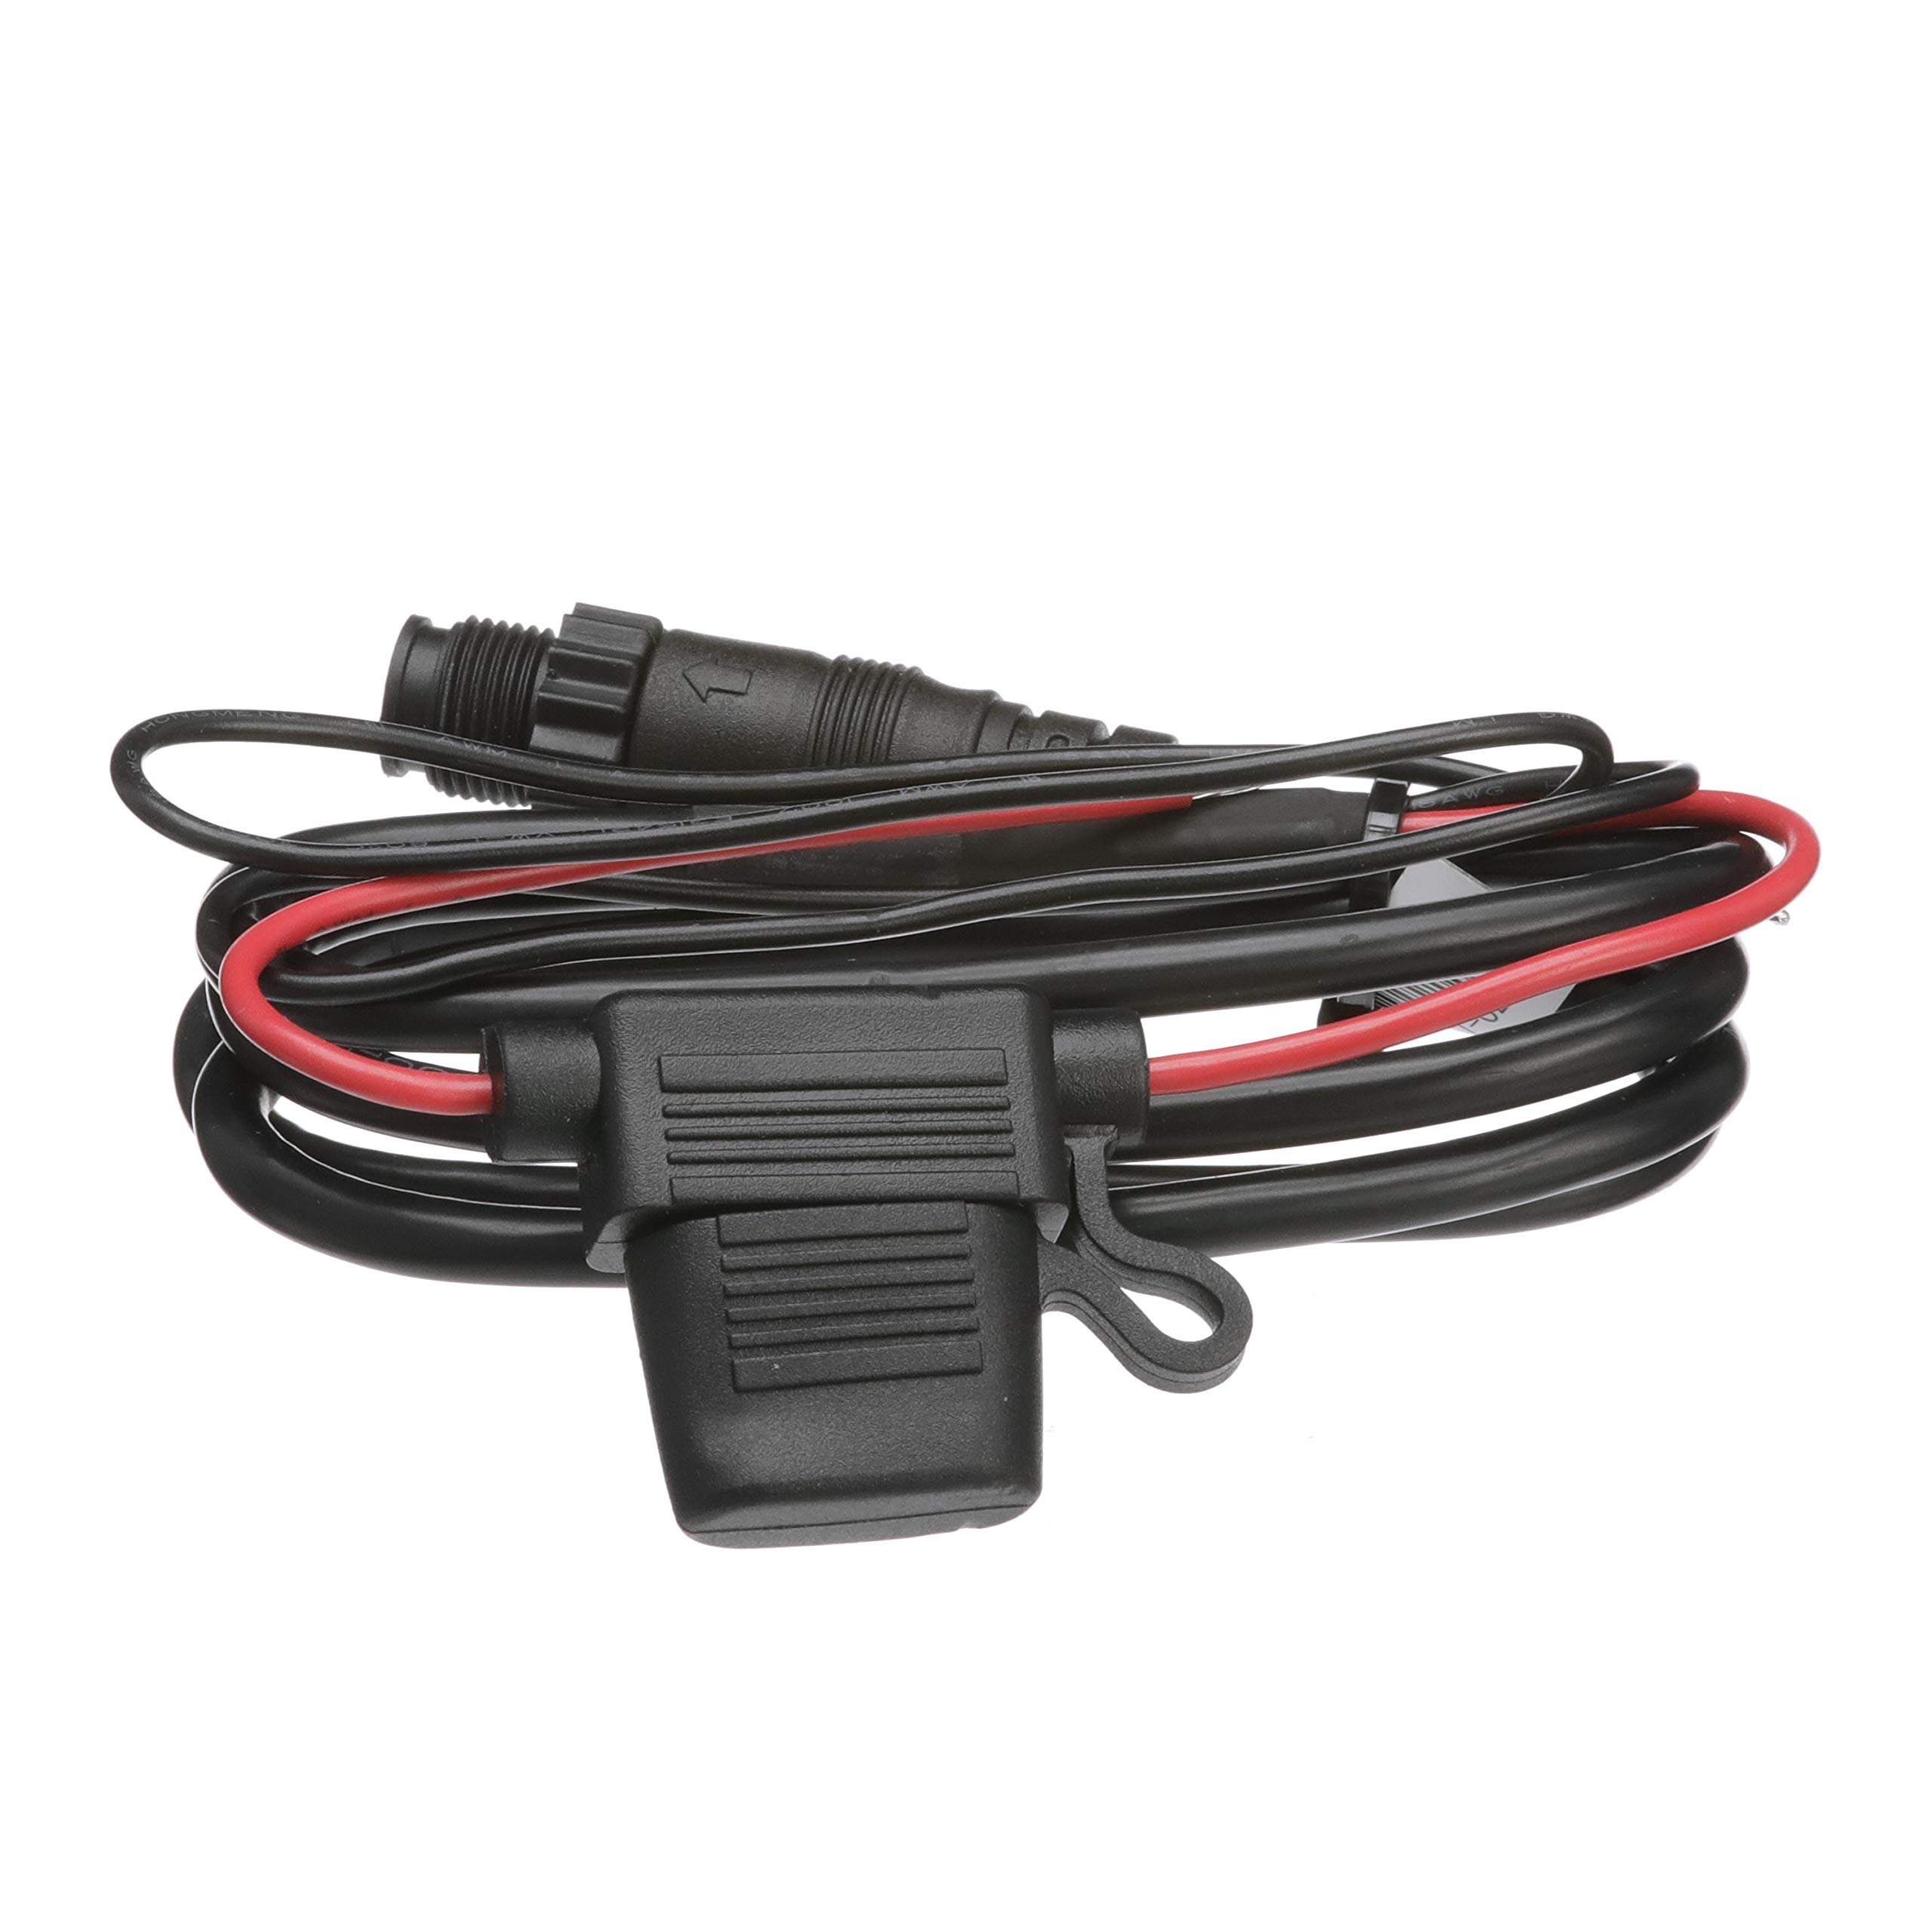 MotorGuide Pinpoint GPS NMEA2000 Starter Kit, Black